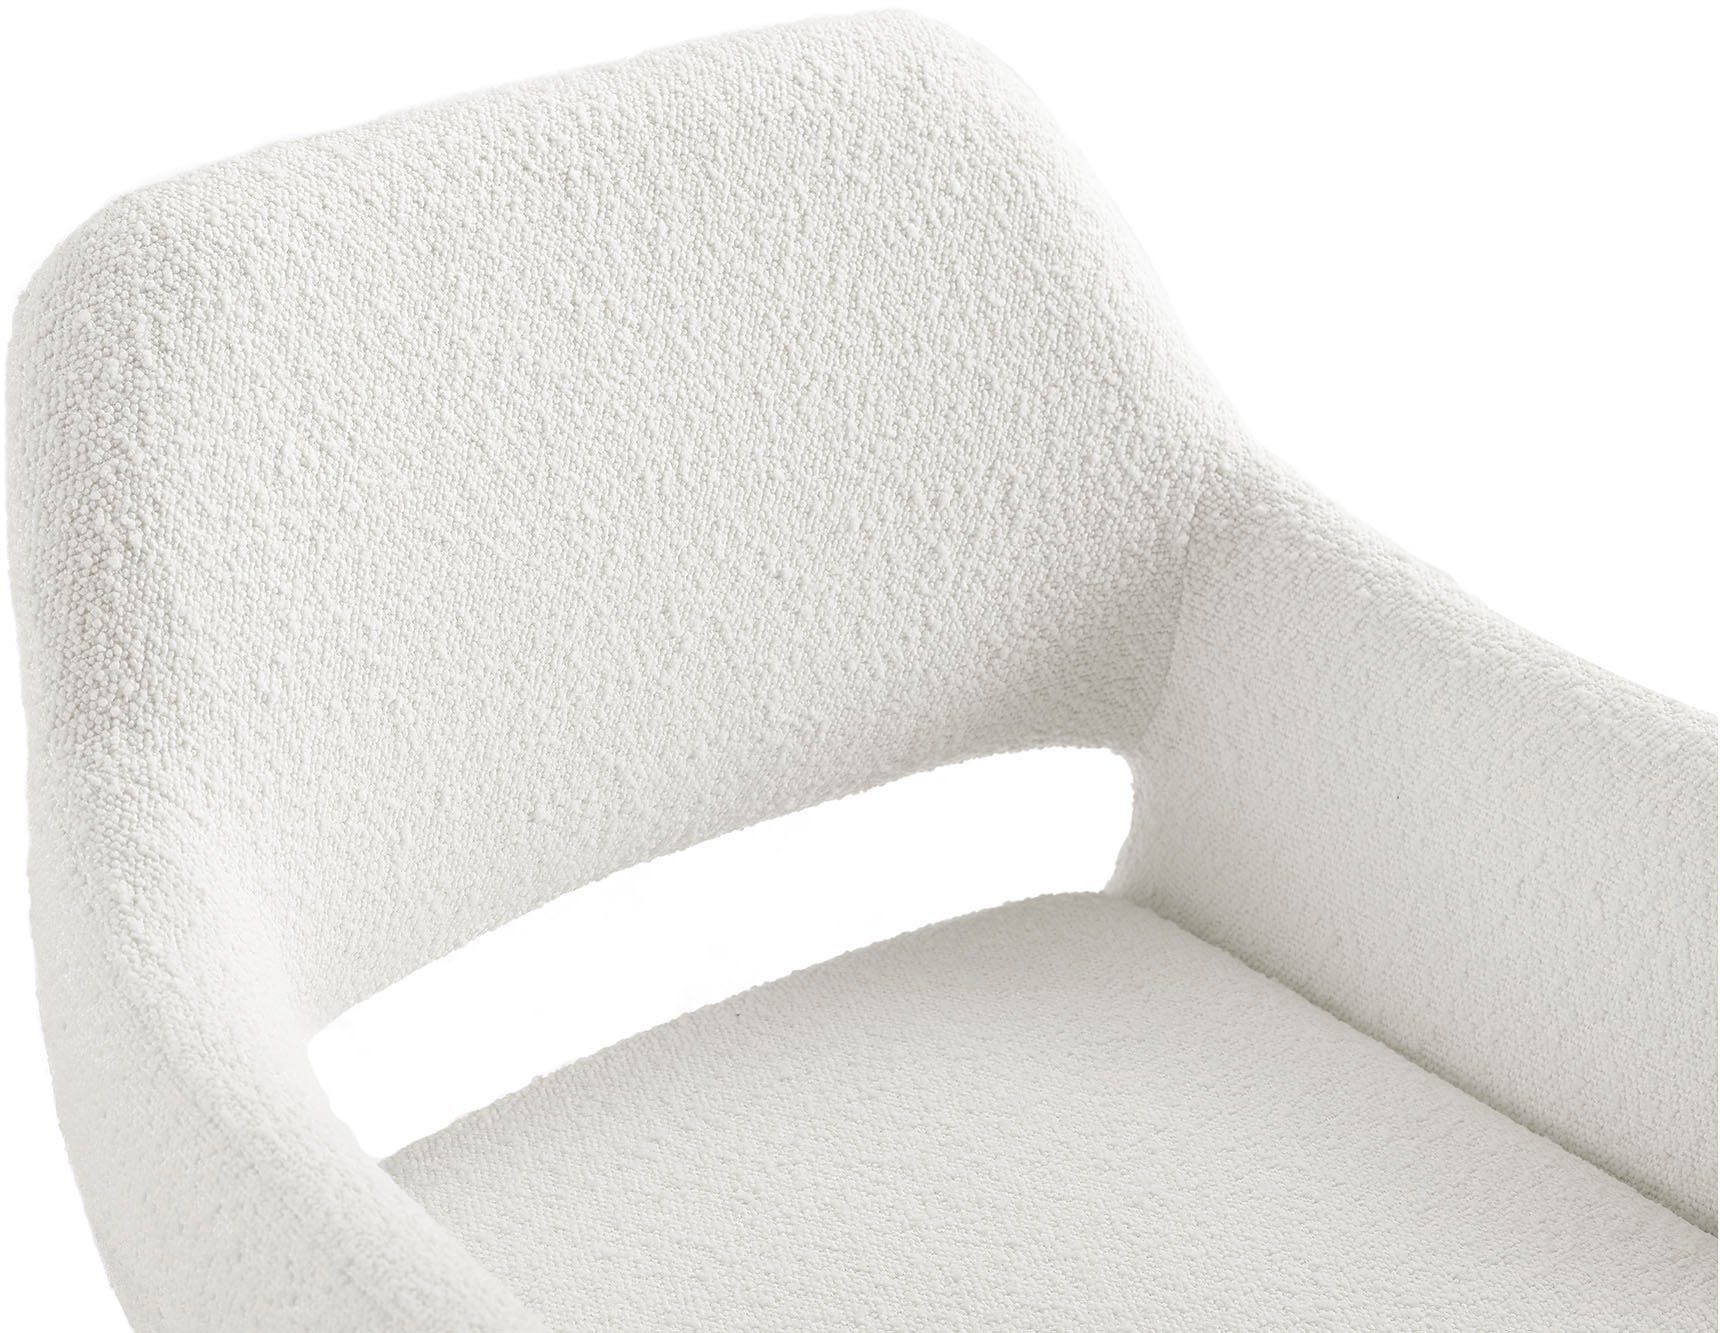 SalesFever Armlehnstuhl, Bezug in Weiß | Optik moderner Weiß Bouclé